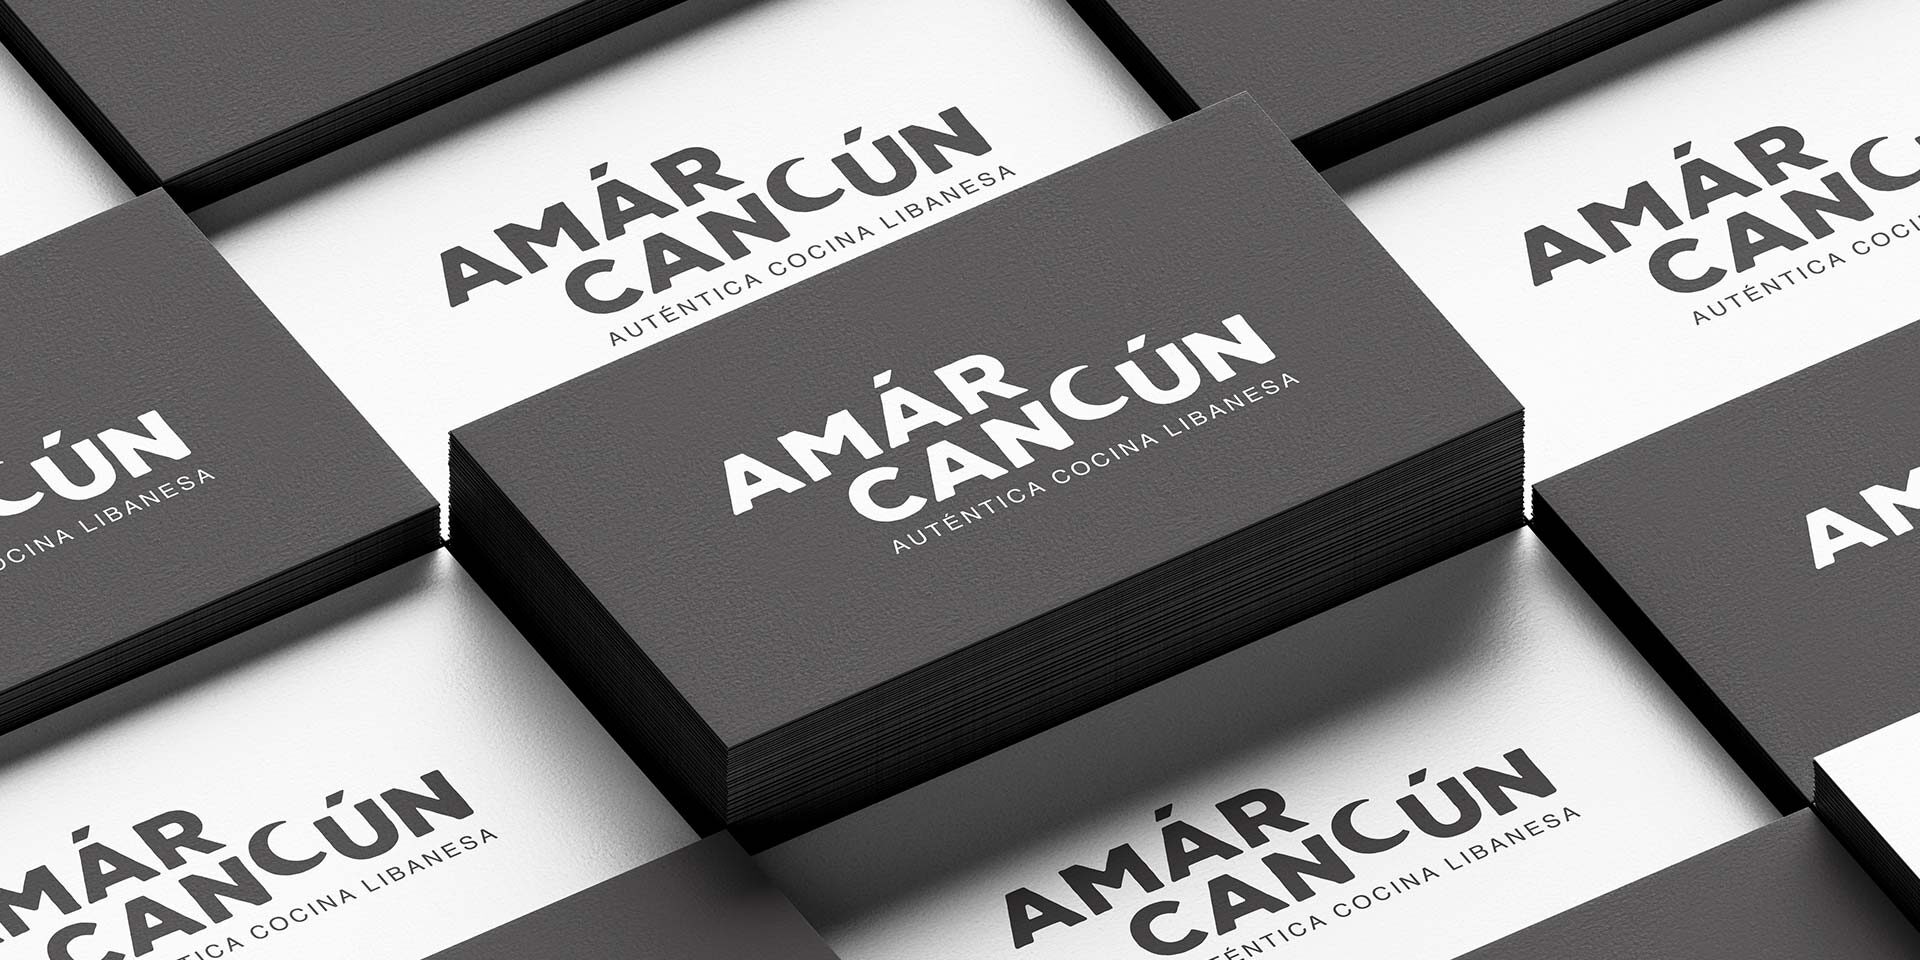 Amar Cancun Mexico Blanchor